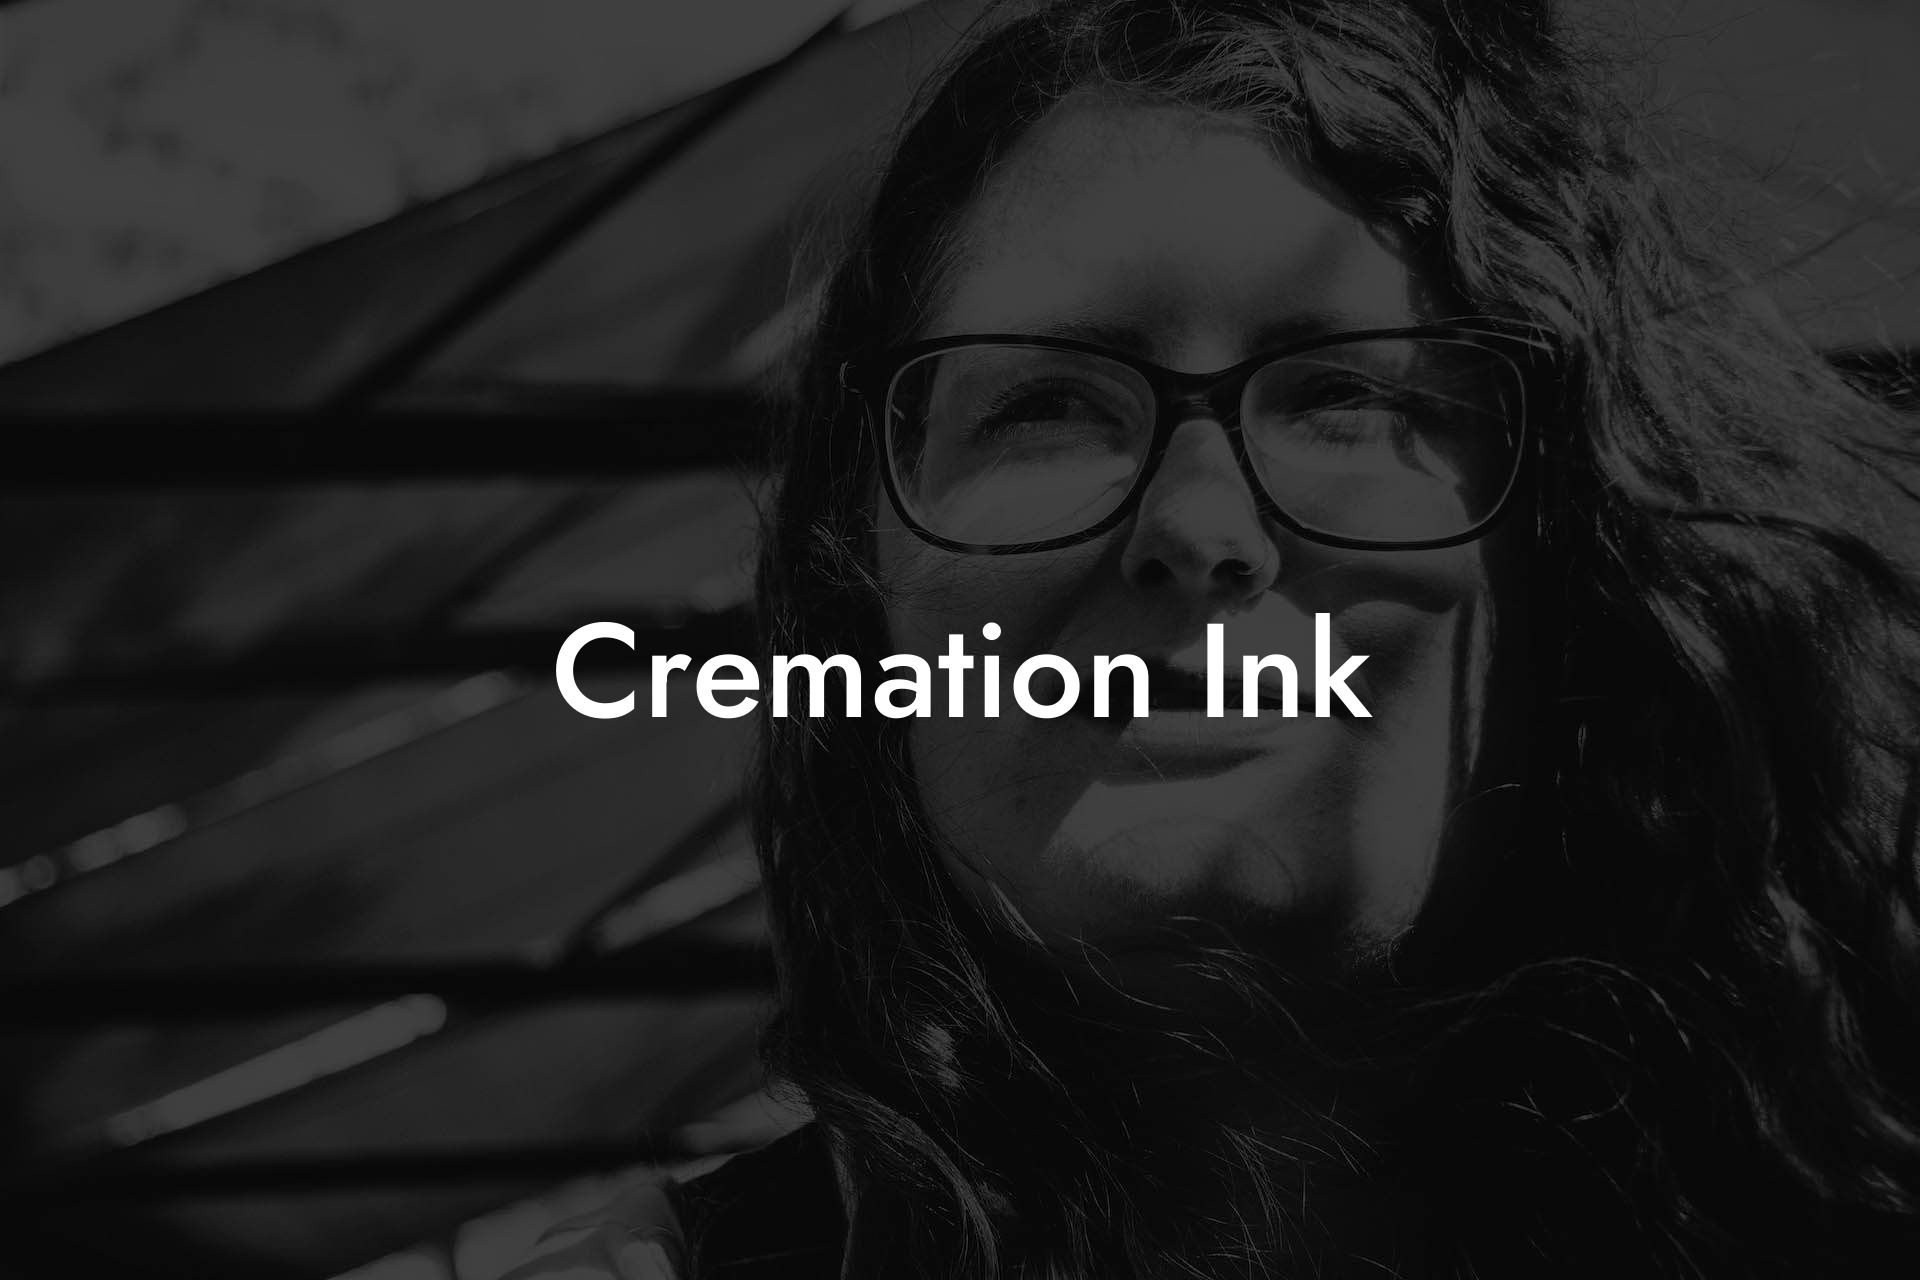 Cremation Ink